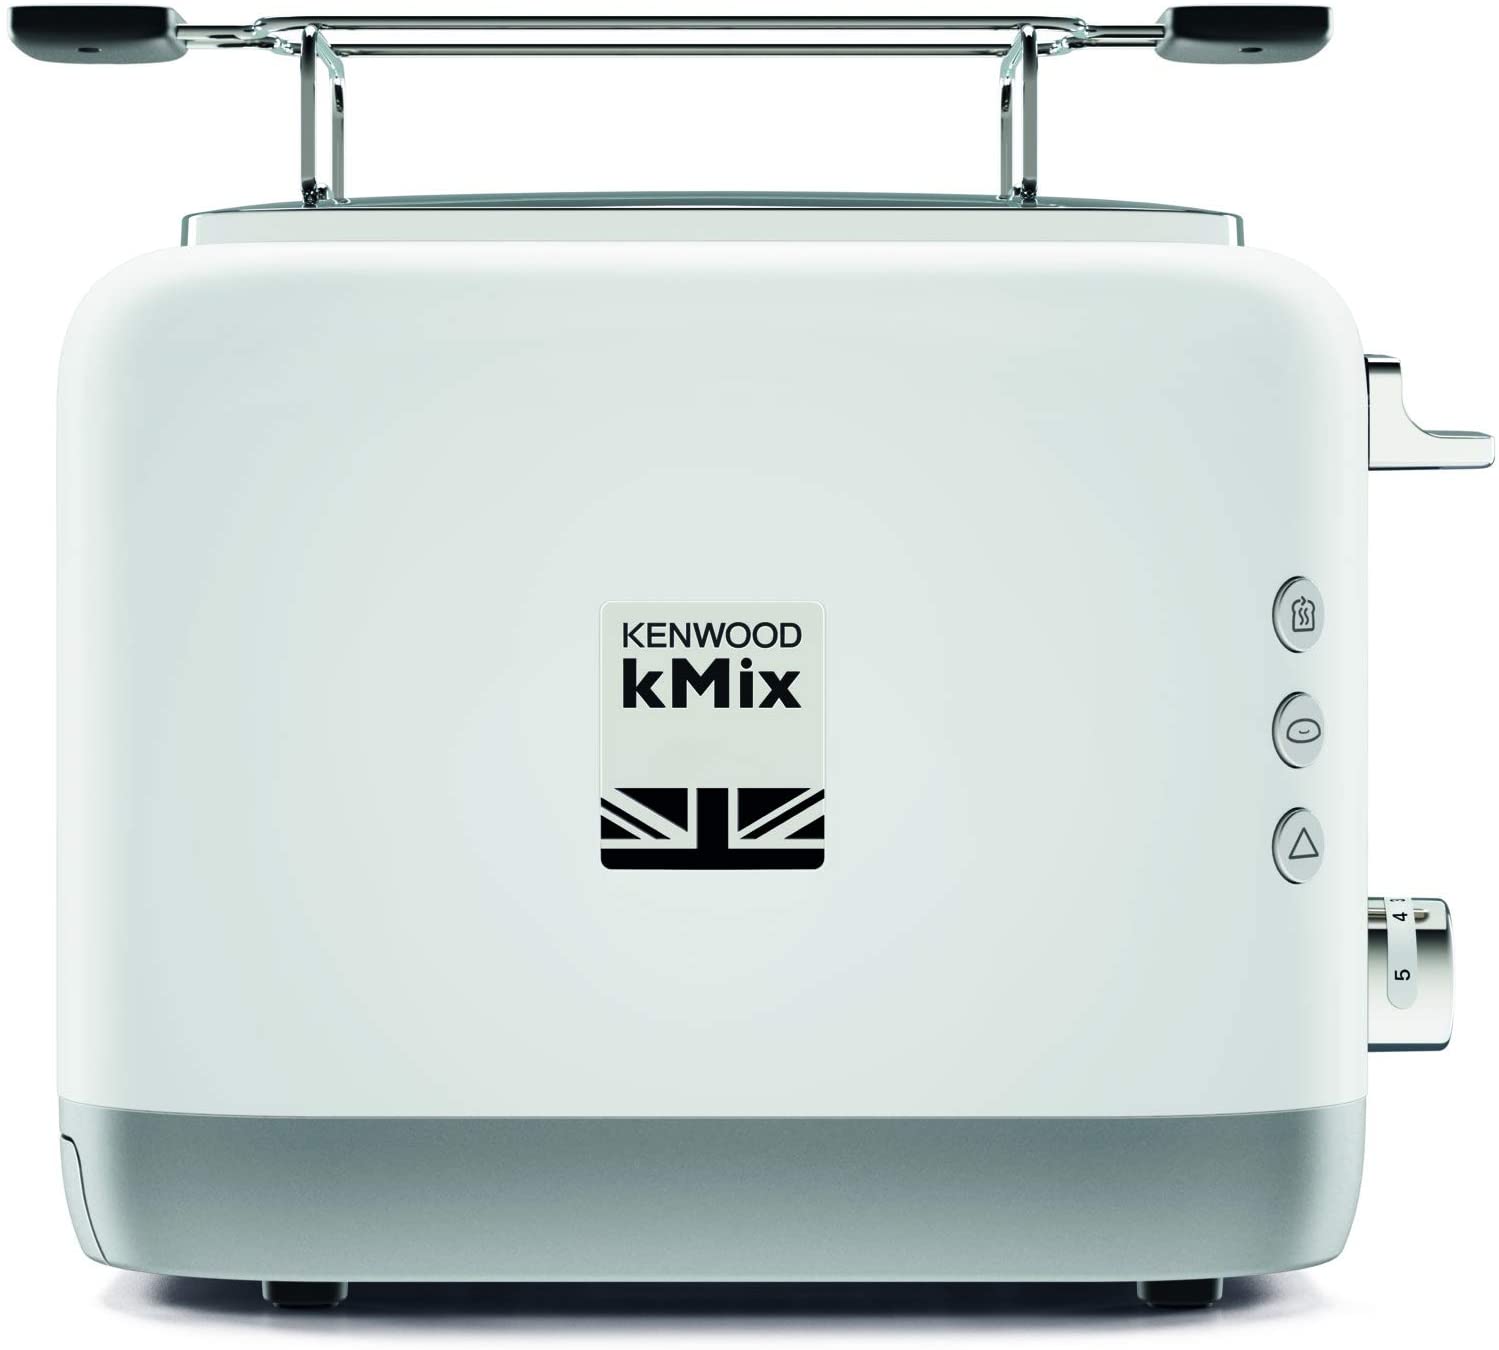 Kenwood TCX751BK 900W Toaster - Black